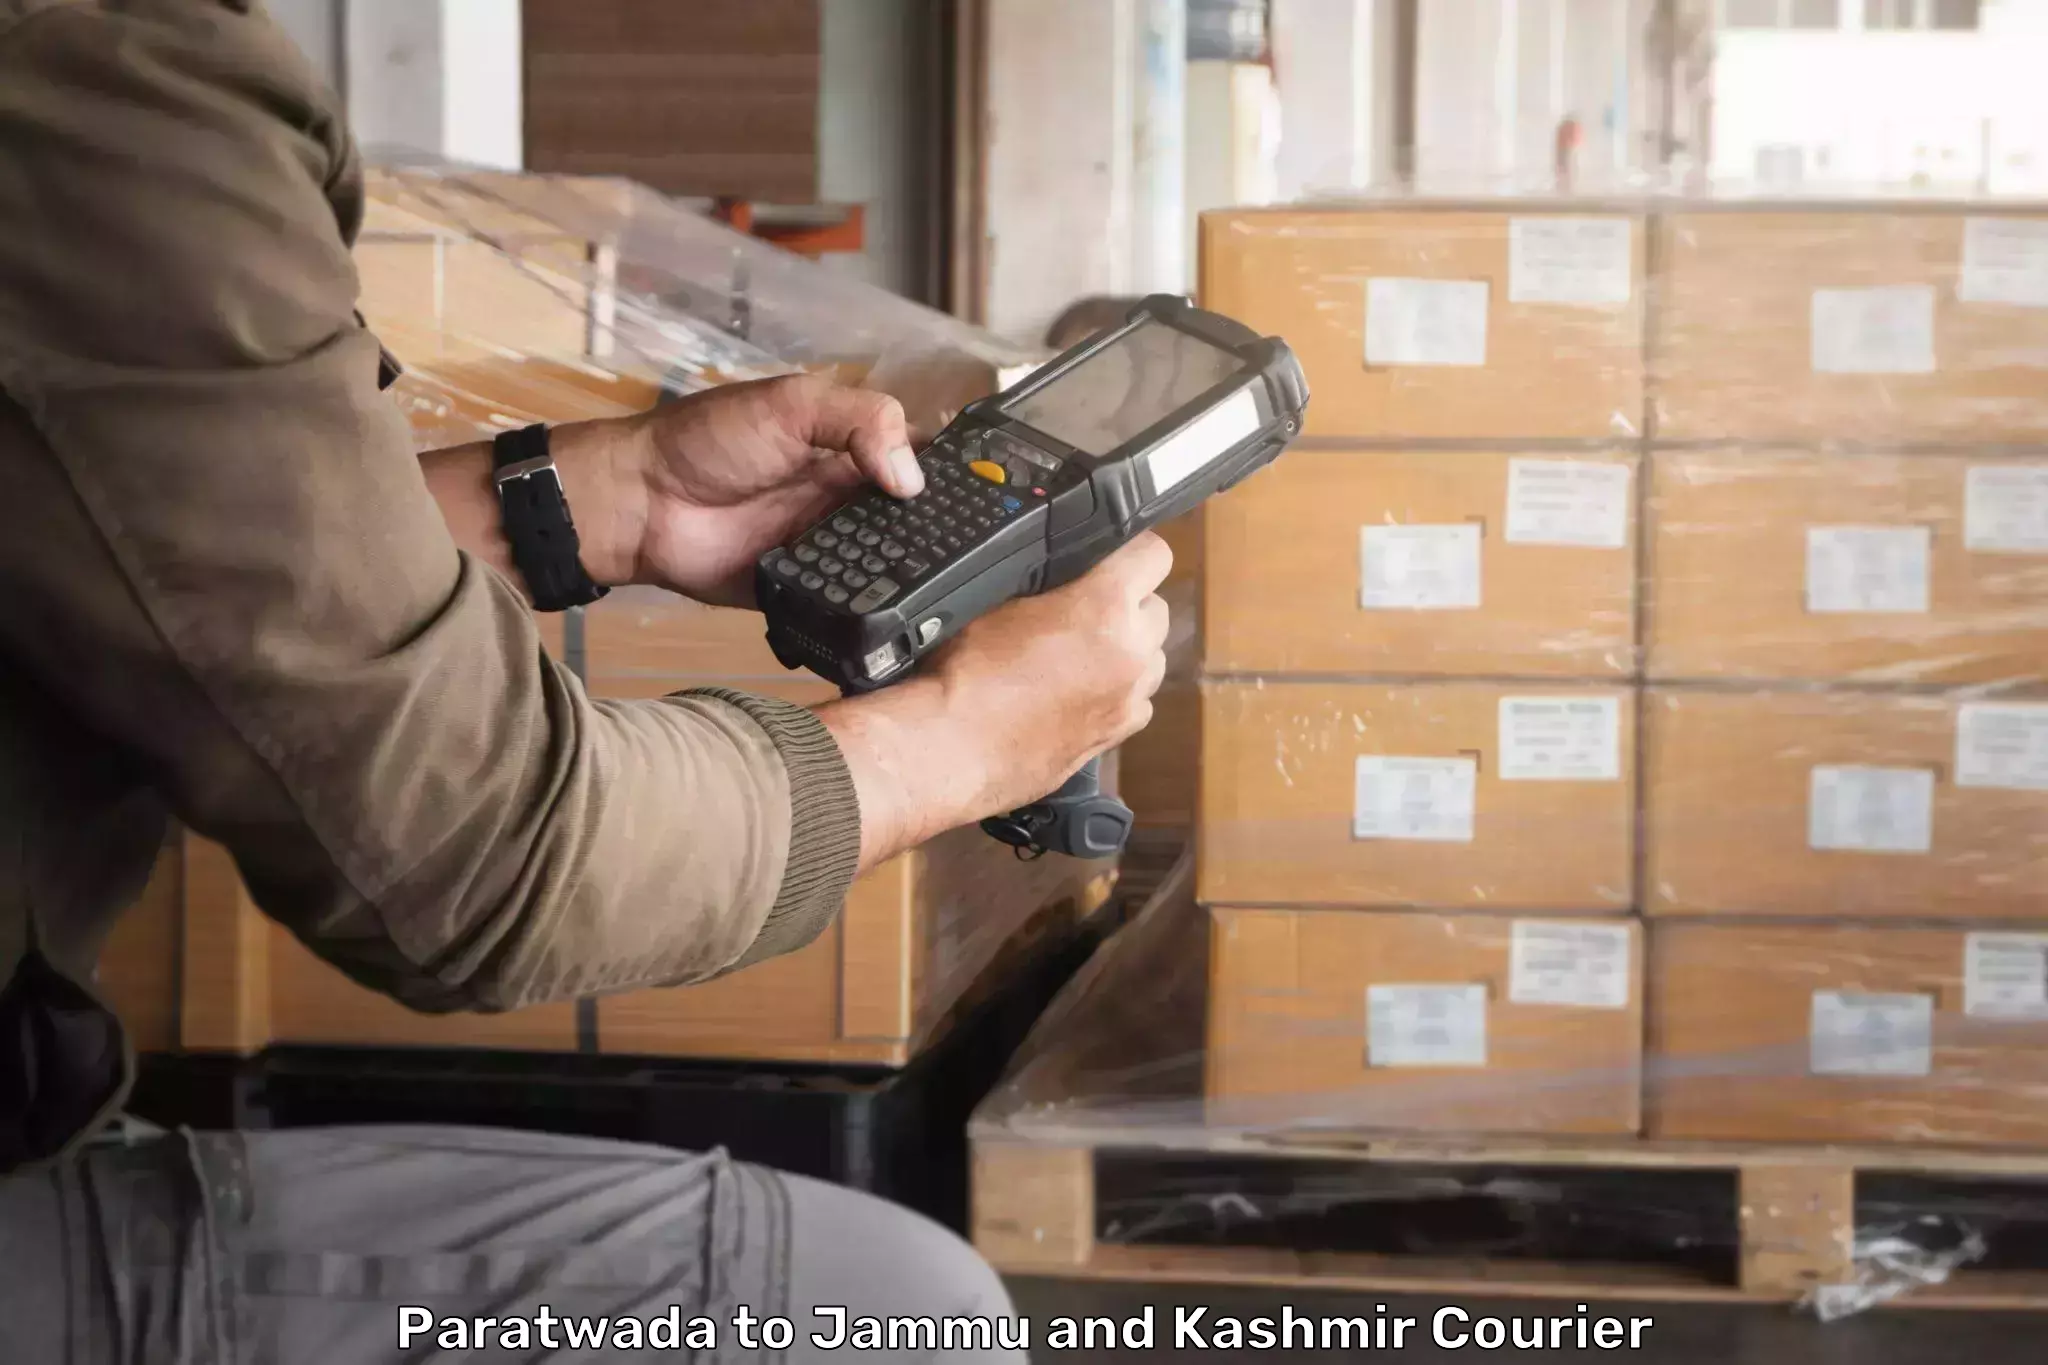 Personal parcel delivery Paratwada to Srinagar Kashmir